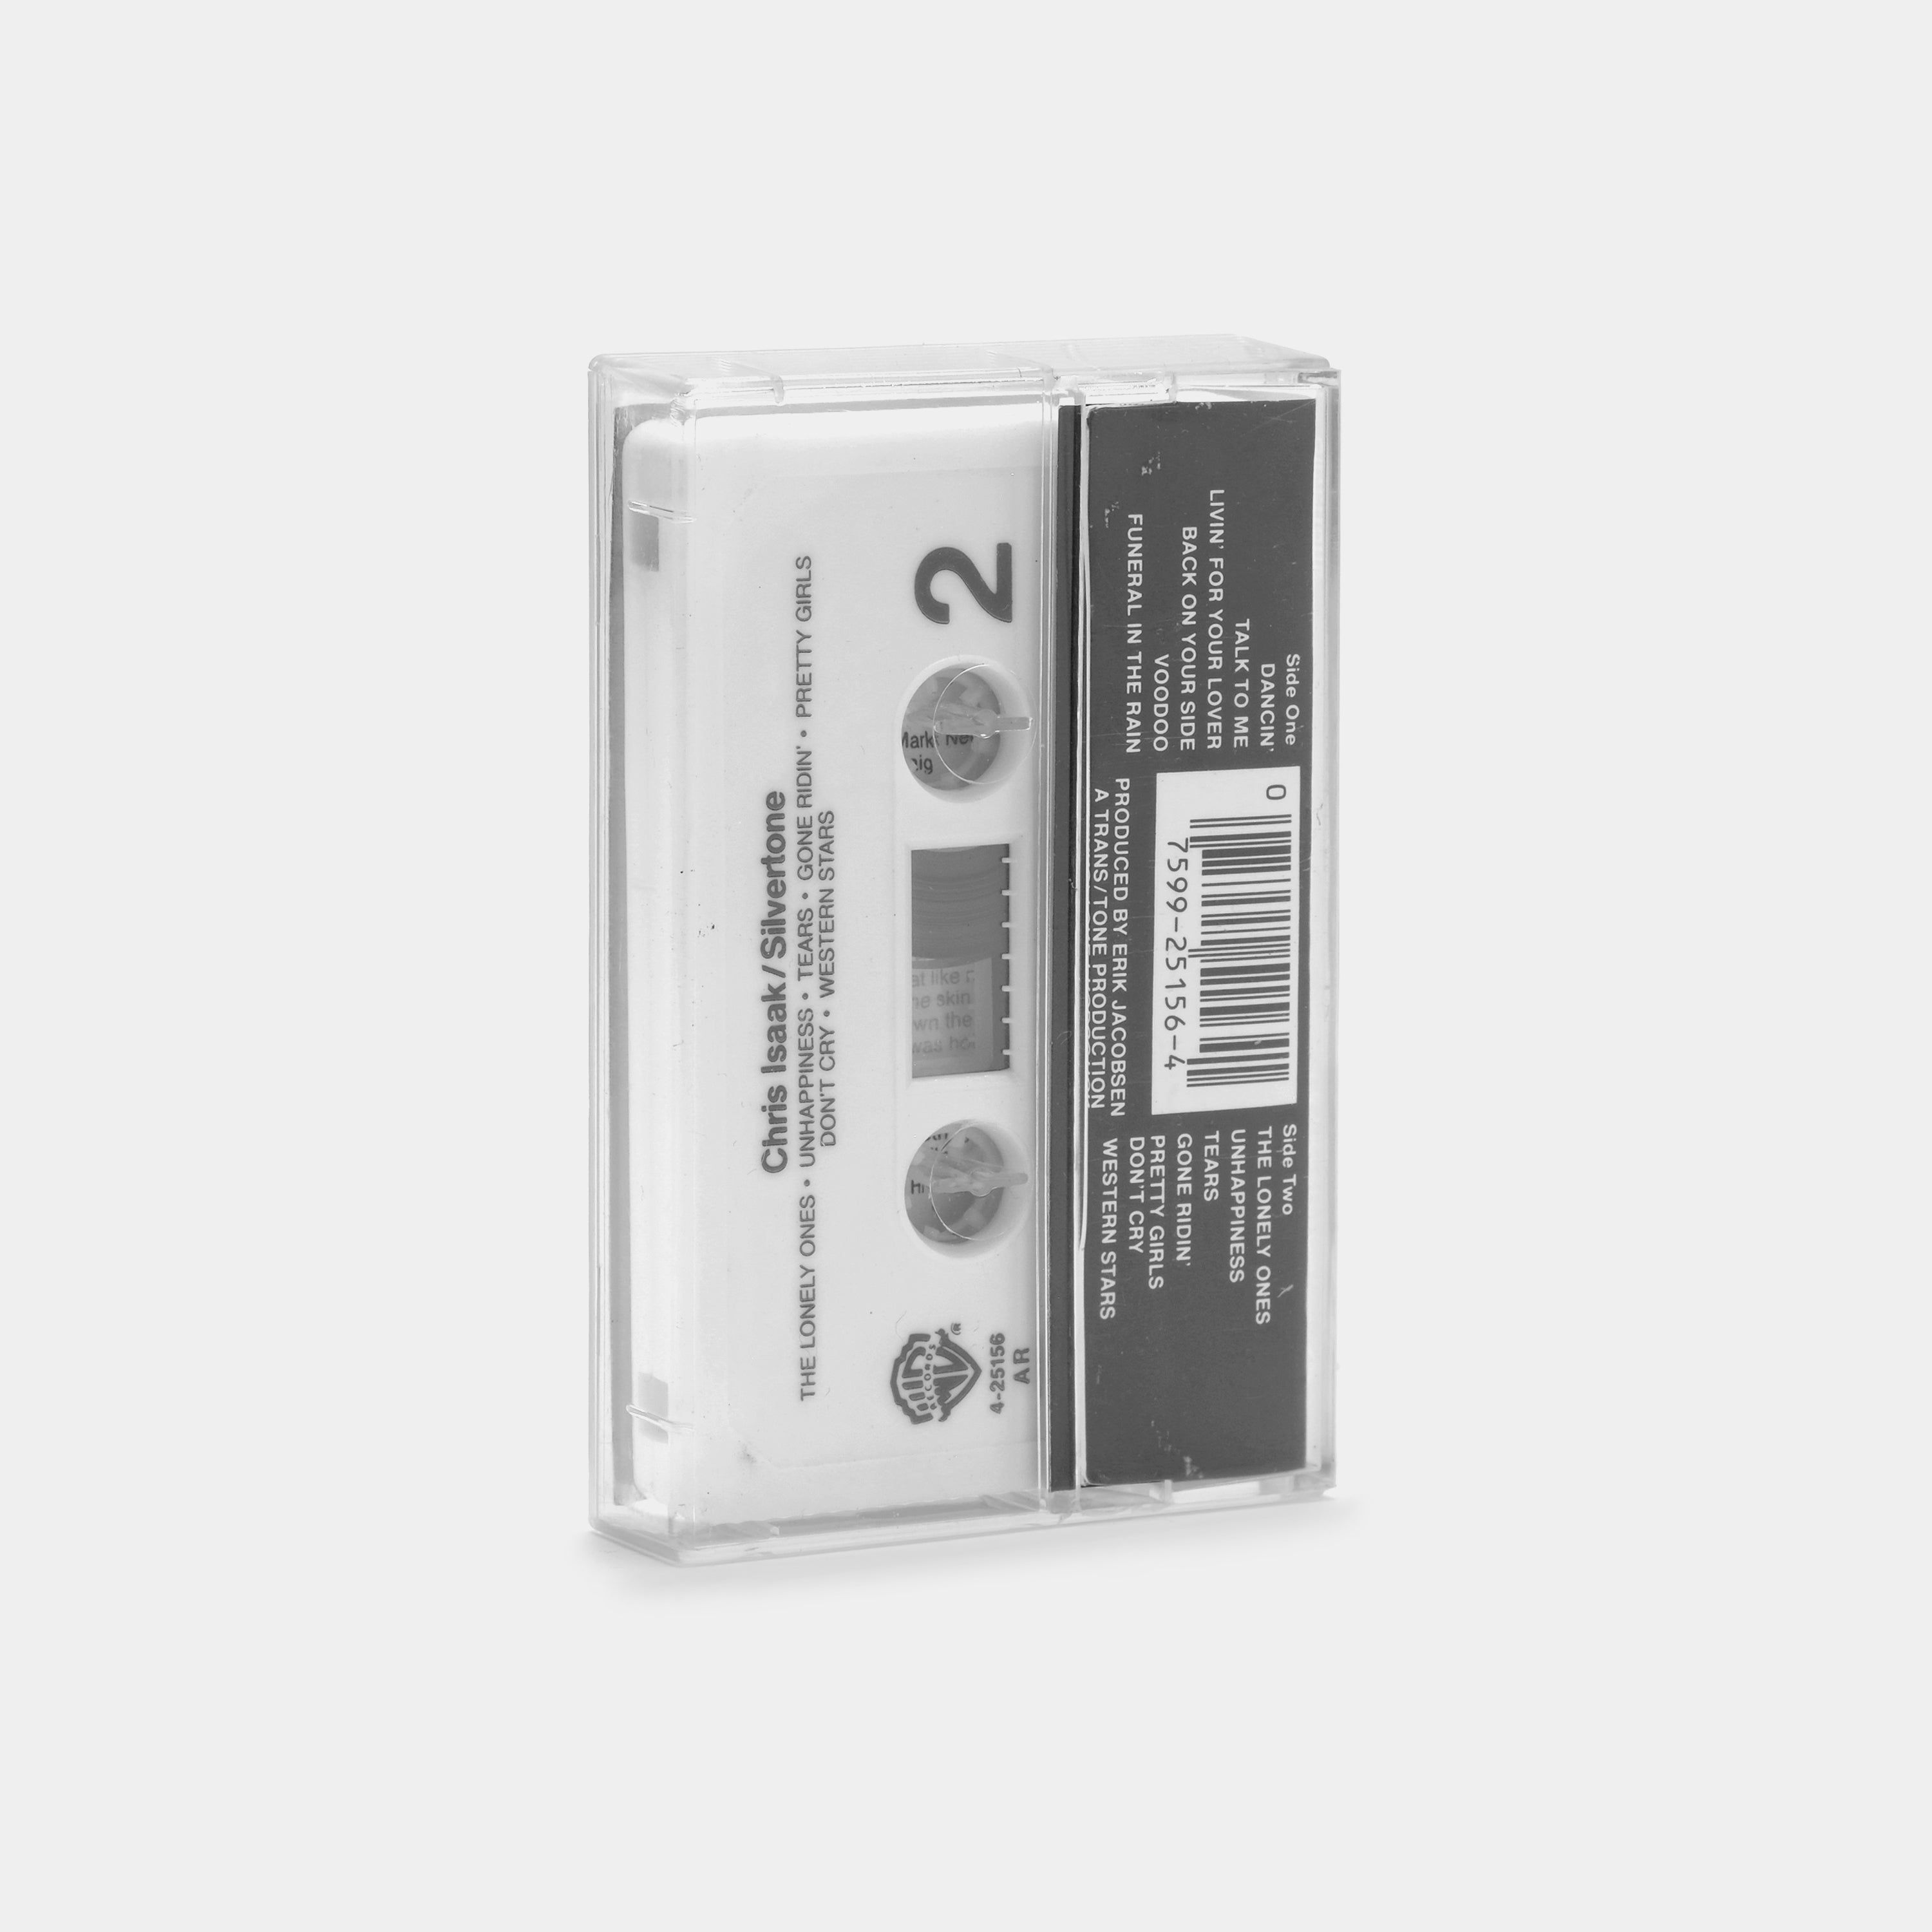 Chris Isaak  - Silvertone Cassette Tape